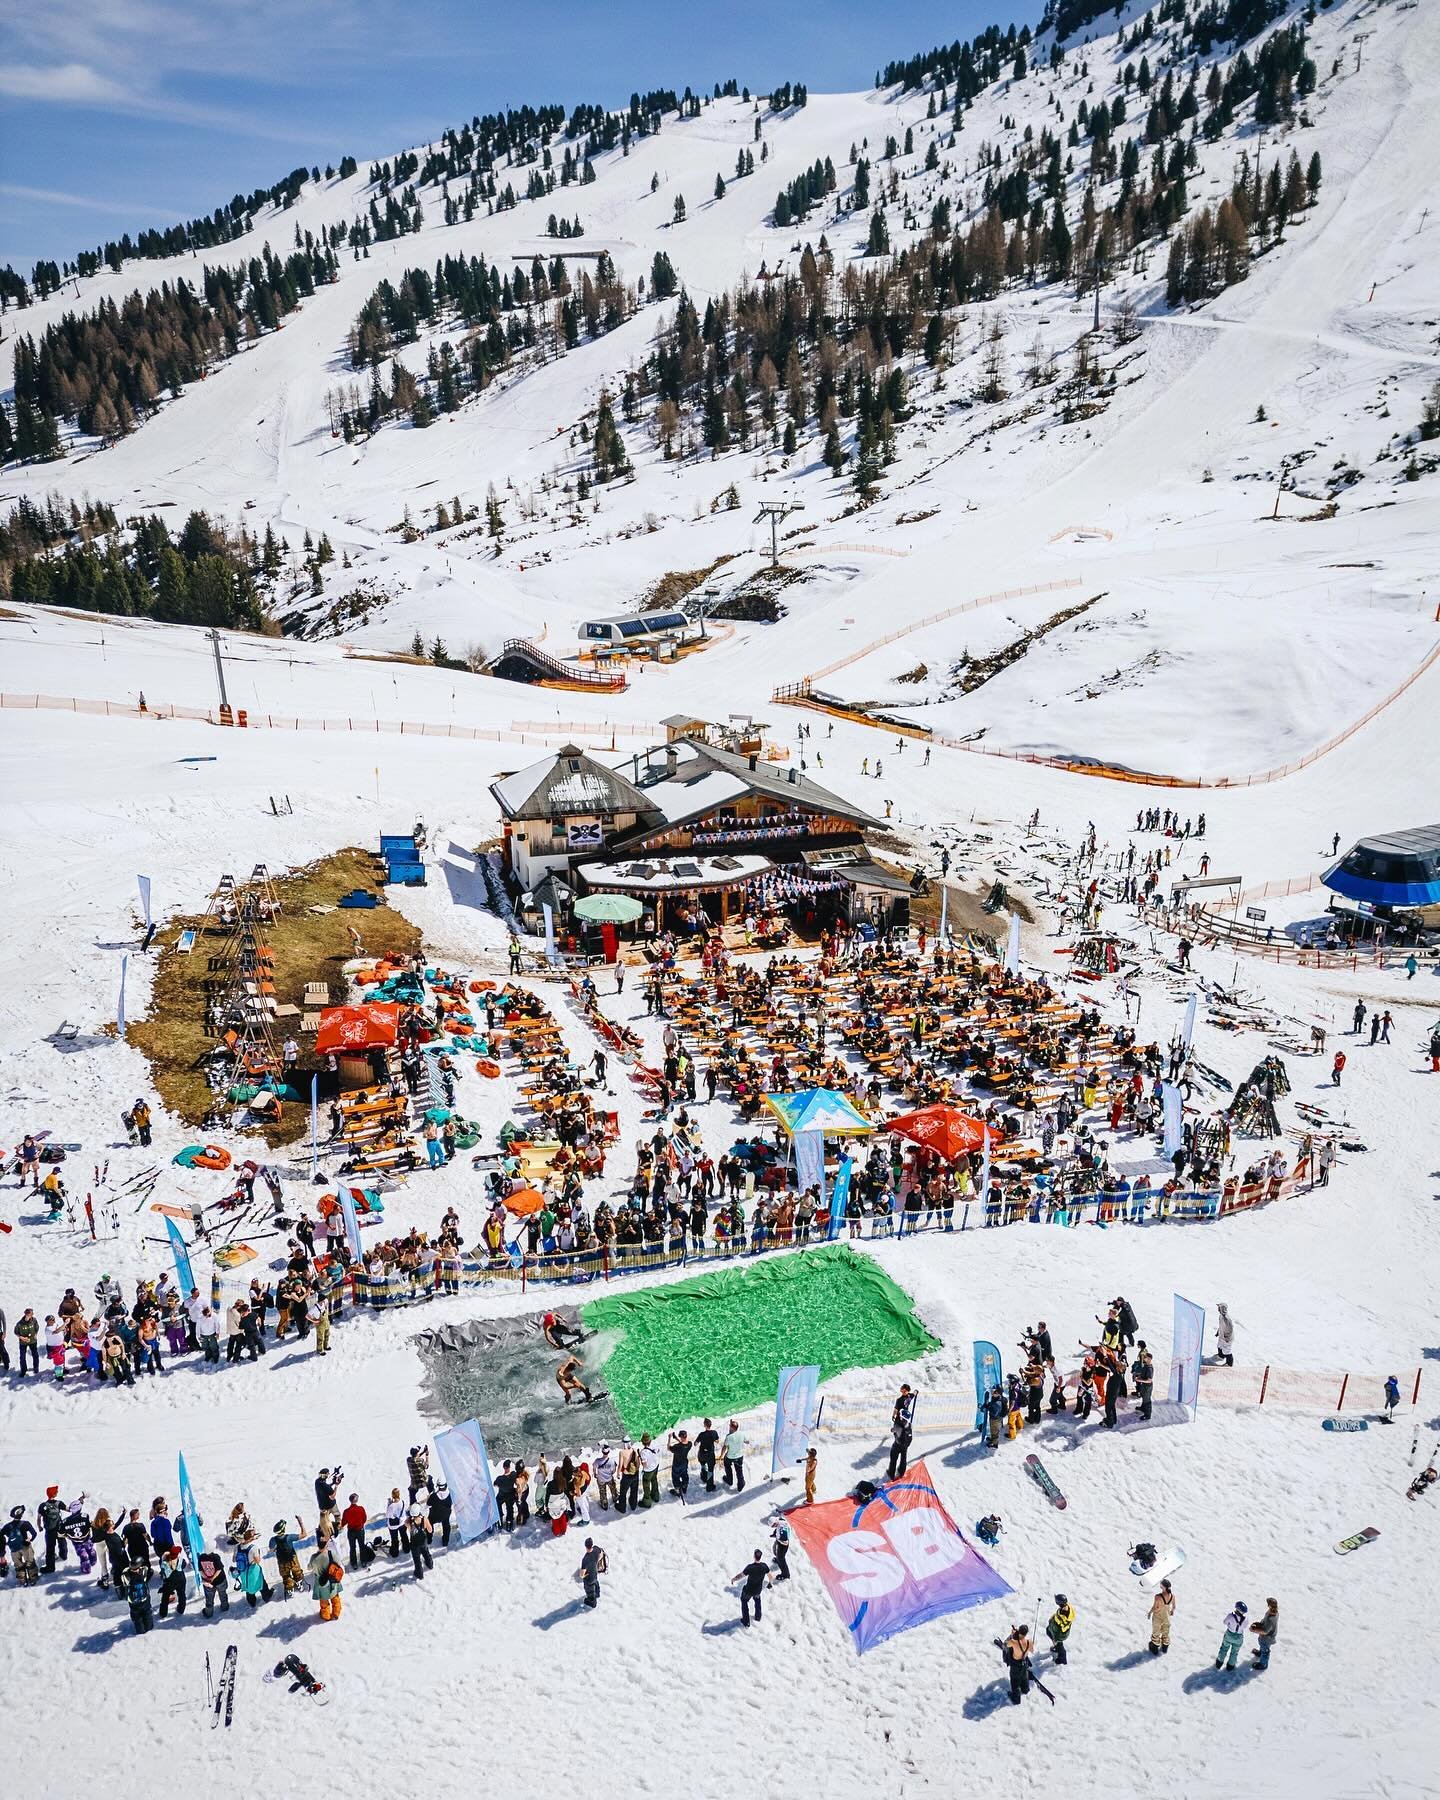 Just chillin&hellip; 🧊 @snowbombingofficial 
.
.
.
@nikoneurope / @fanaticlive 📷 
.
.
.
#musicphotography #festivalphotographer #festivals #snowbombing #procomp #snowboarders #skiing #skiseason #tricks #redbullphotography @redbullphotography #ponds